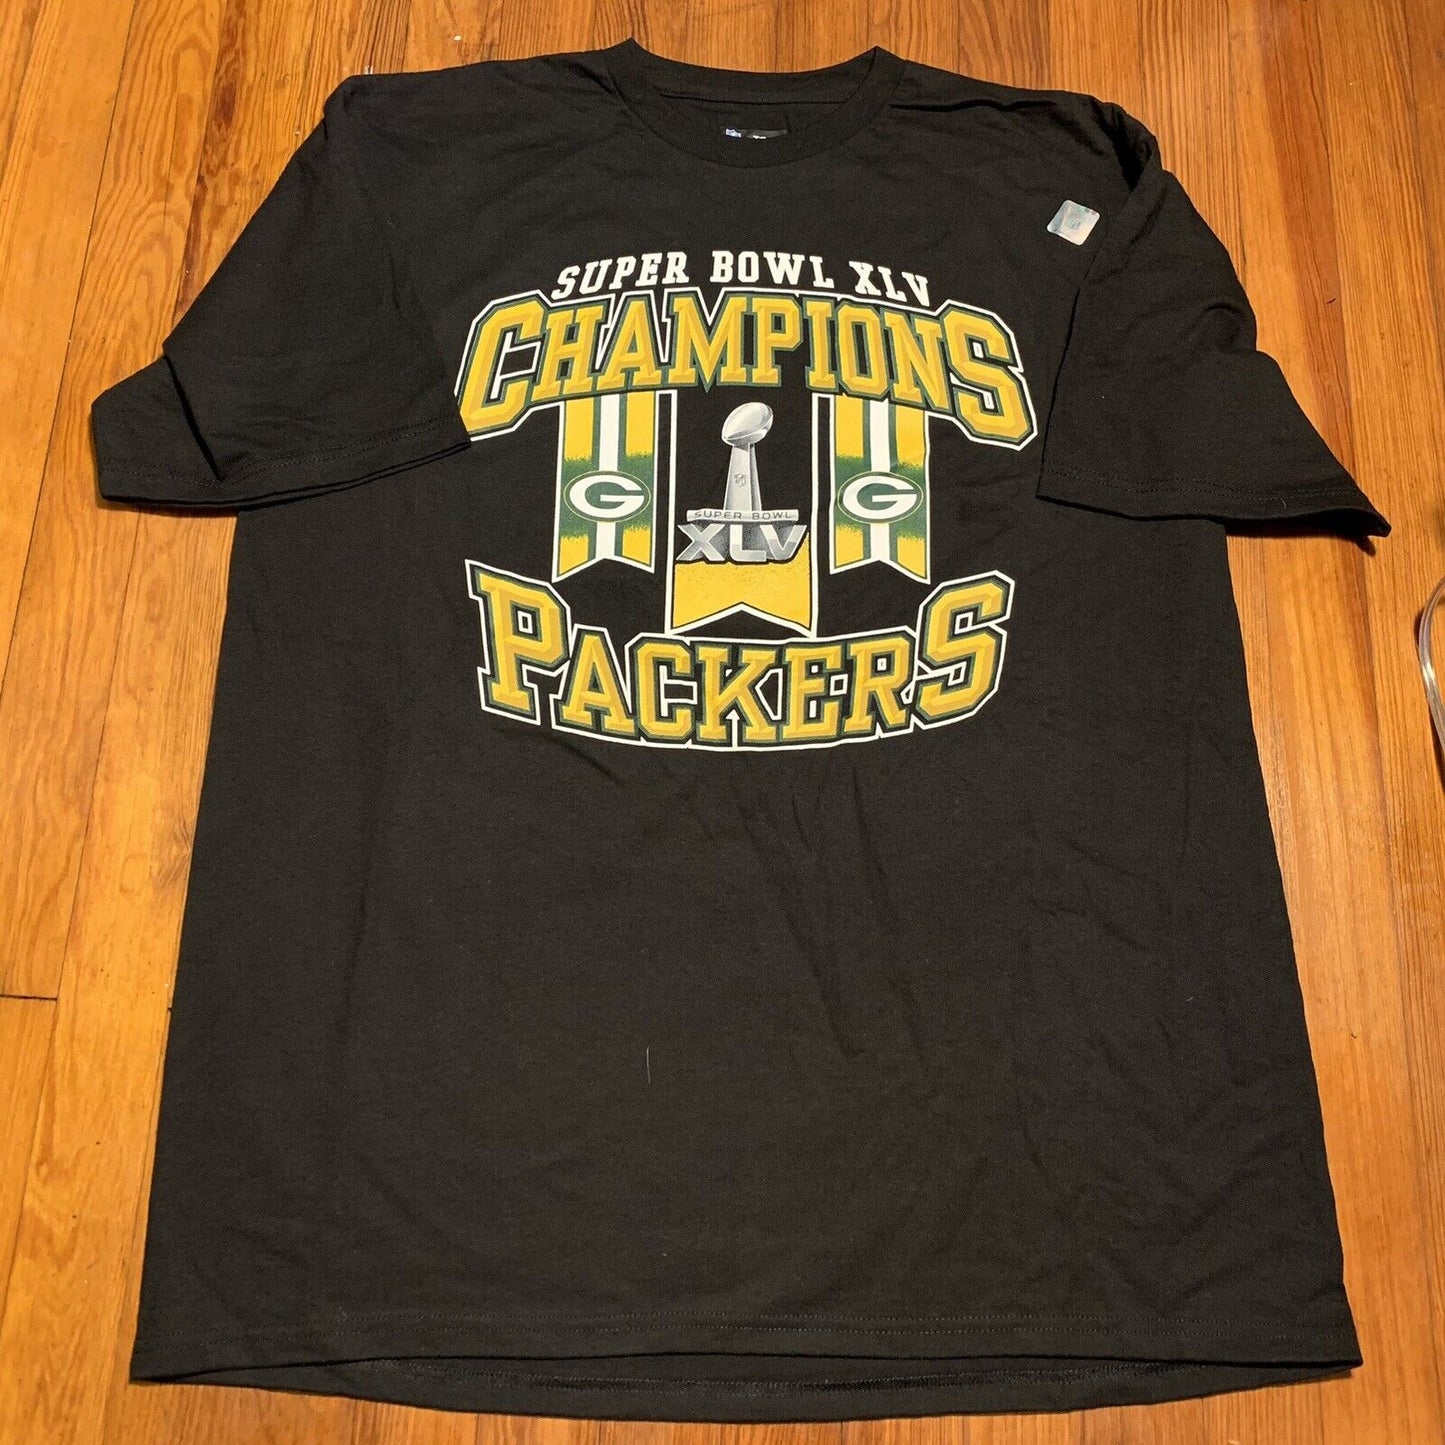 Super Bowl Xlv Green Bay Packers T Shirt Size Xl